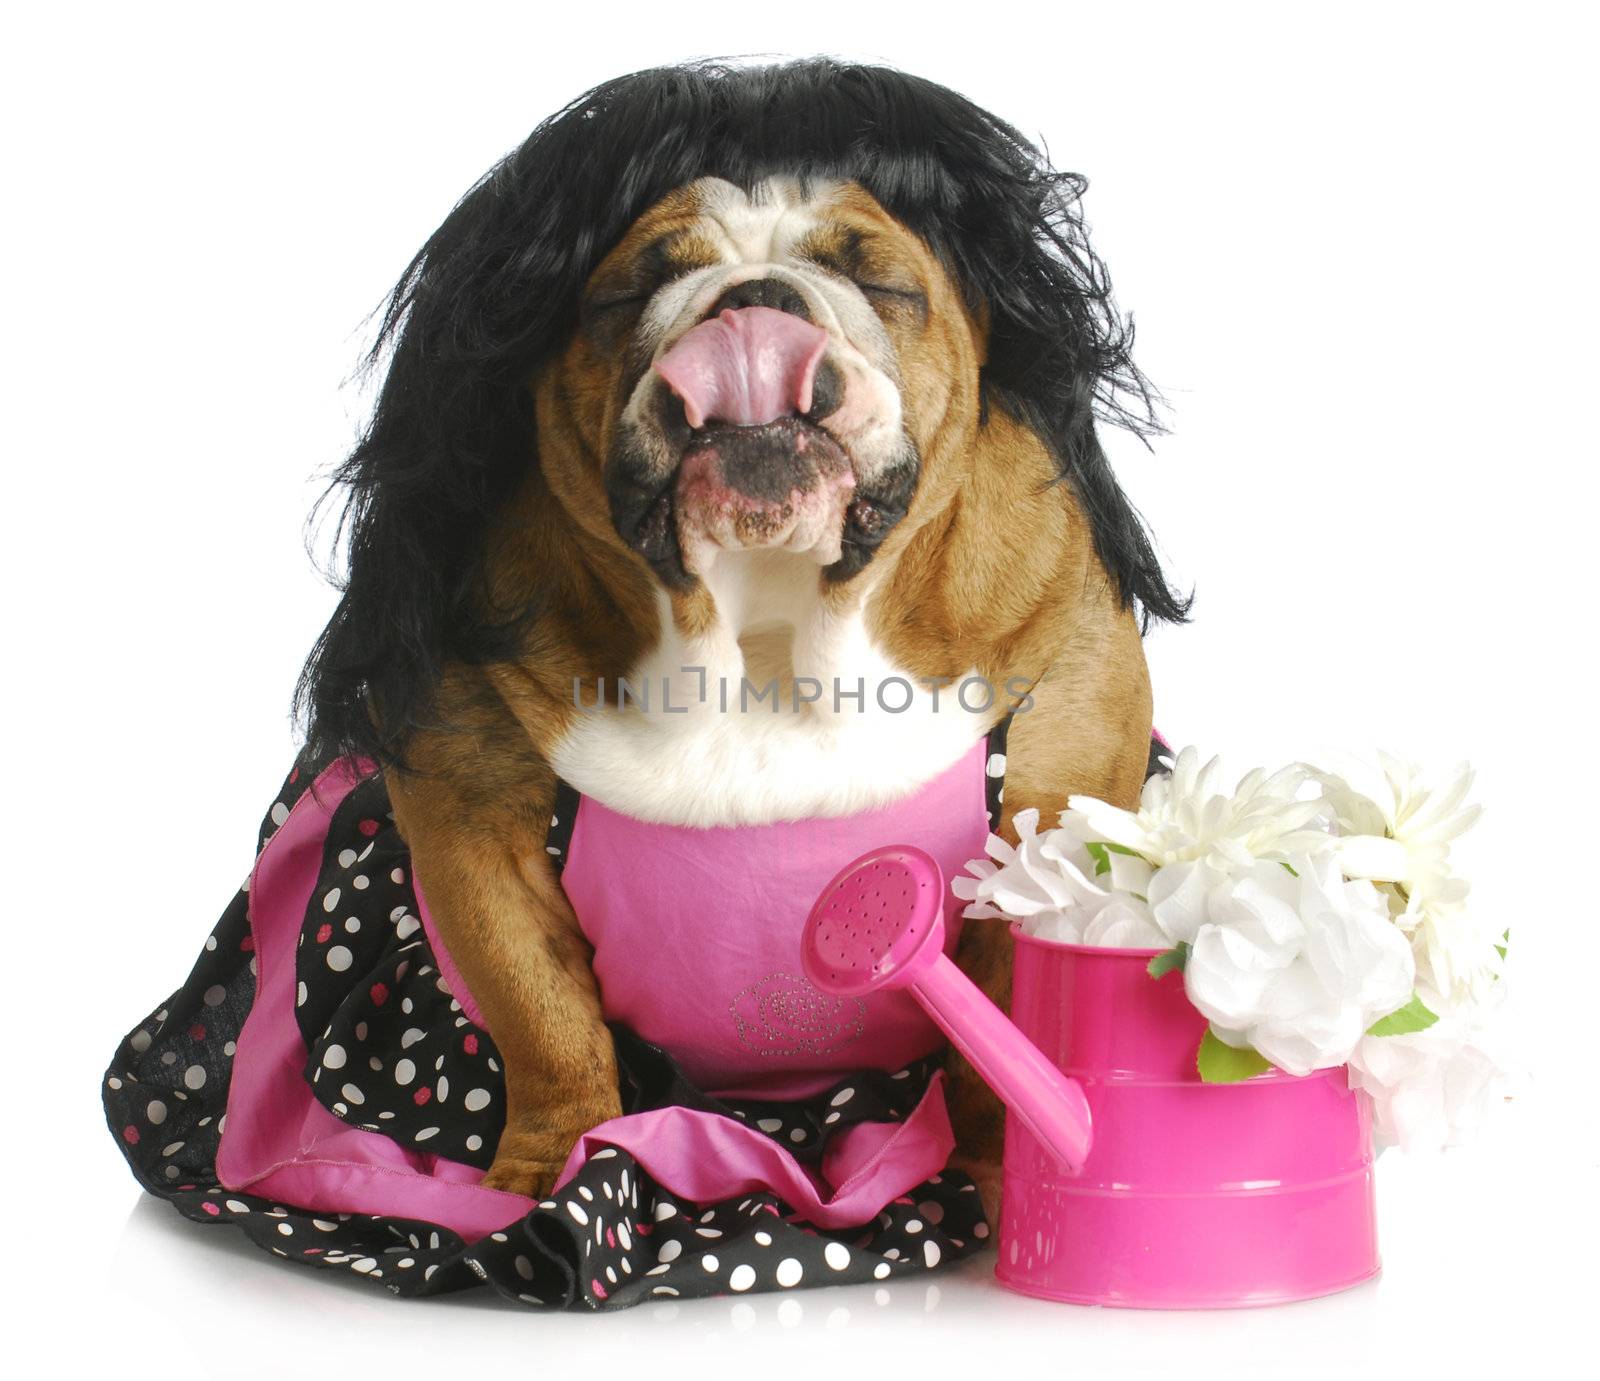 spoiled dog - female english bulldog with funny expression on white background